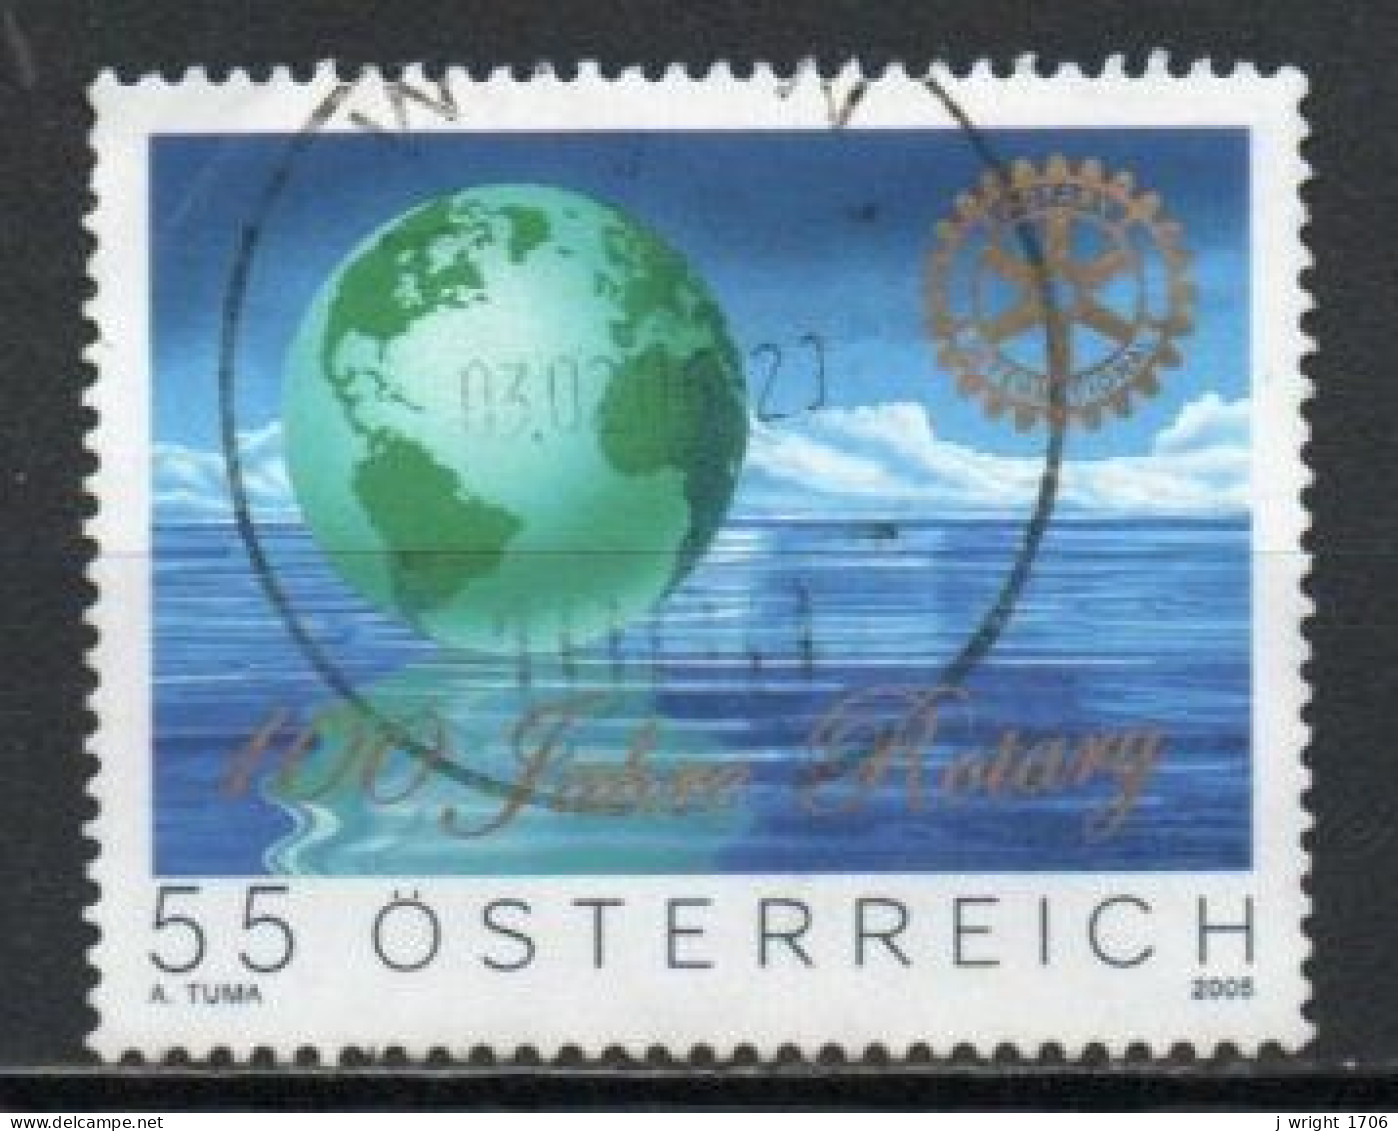 Austria, 2005, Rotary International Centenary, 55c, USED - Oblitérés